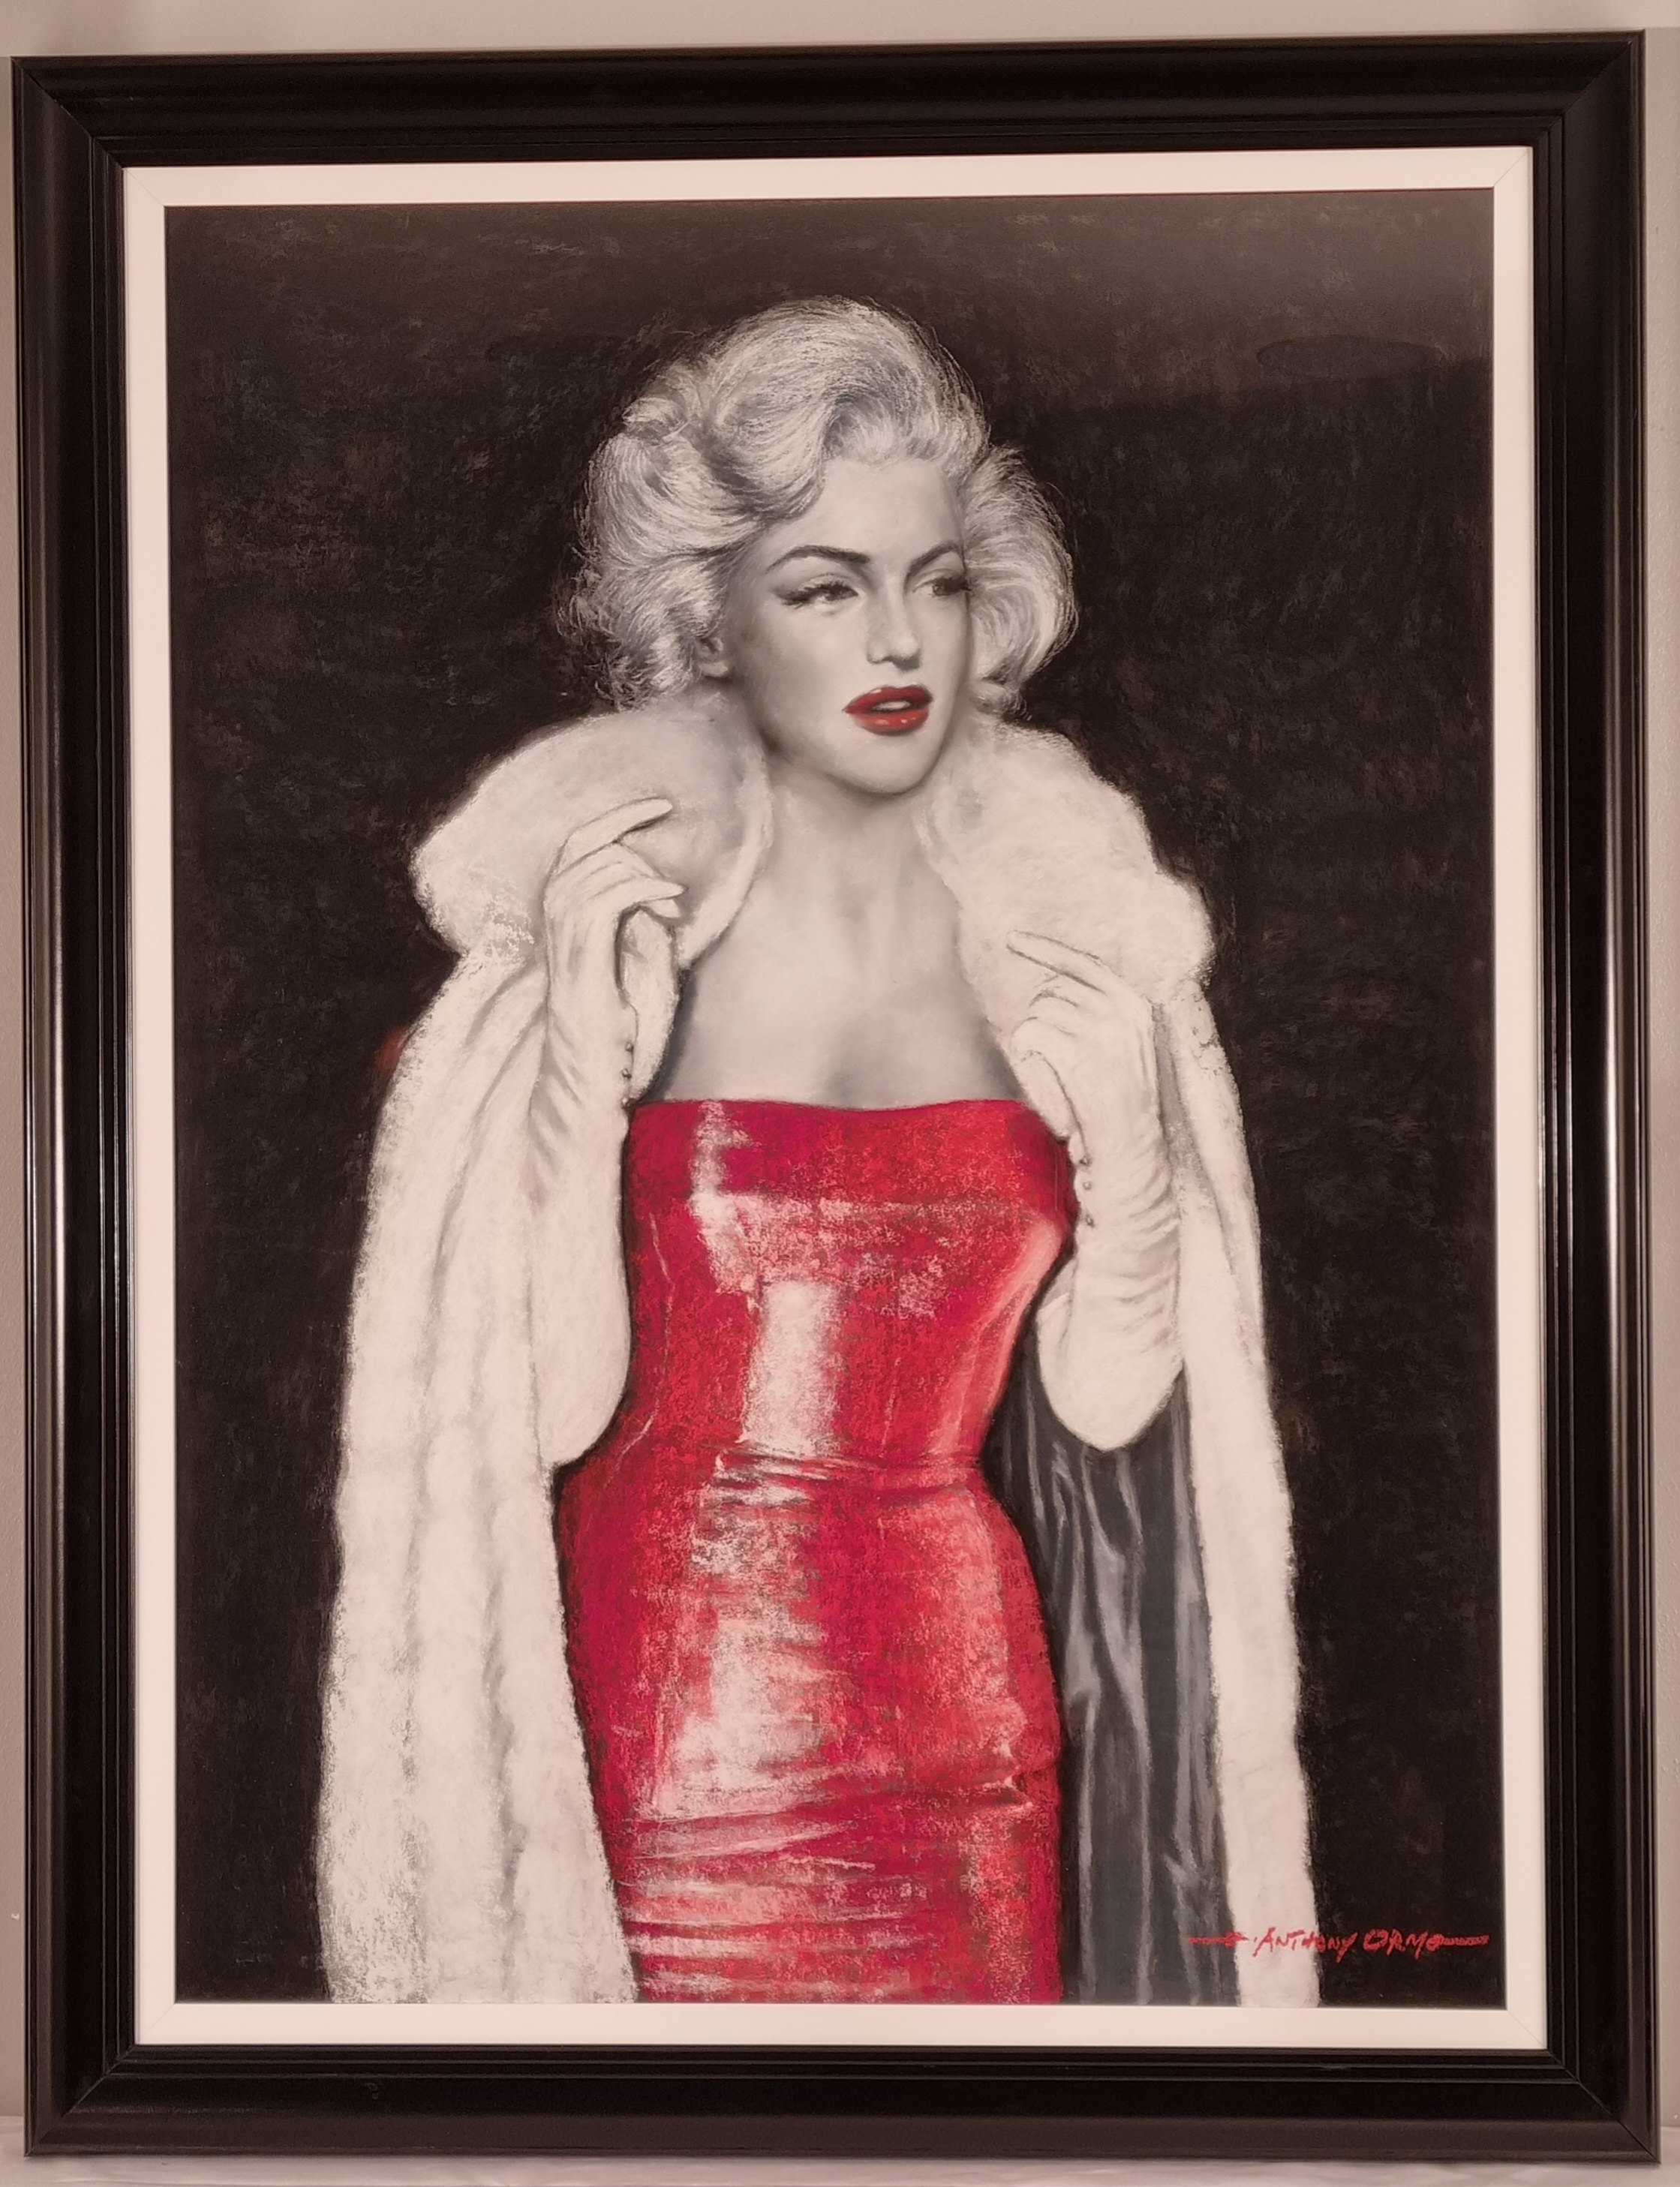 Stunning Original Painting of Marilyn Monroe - Image 2 of 6